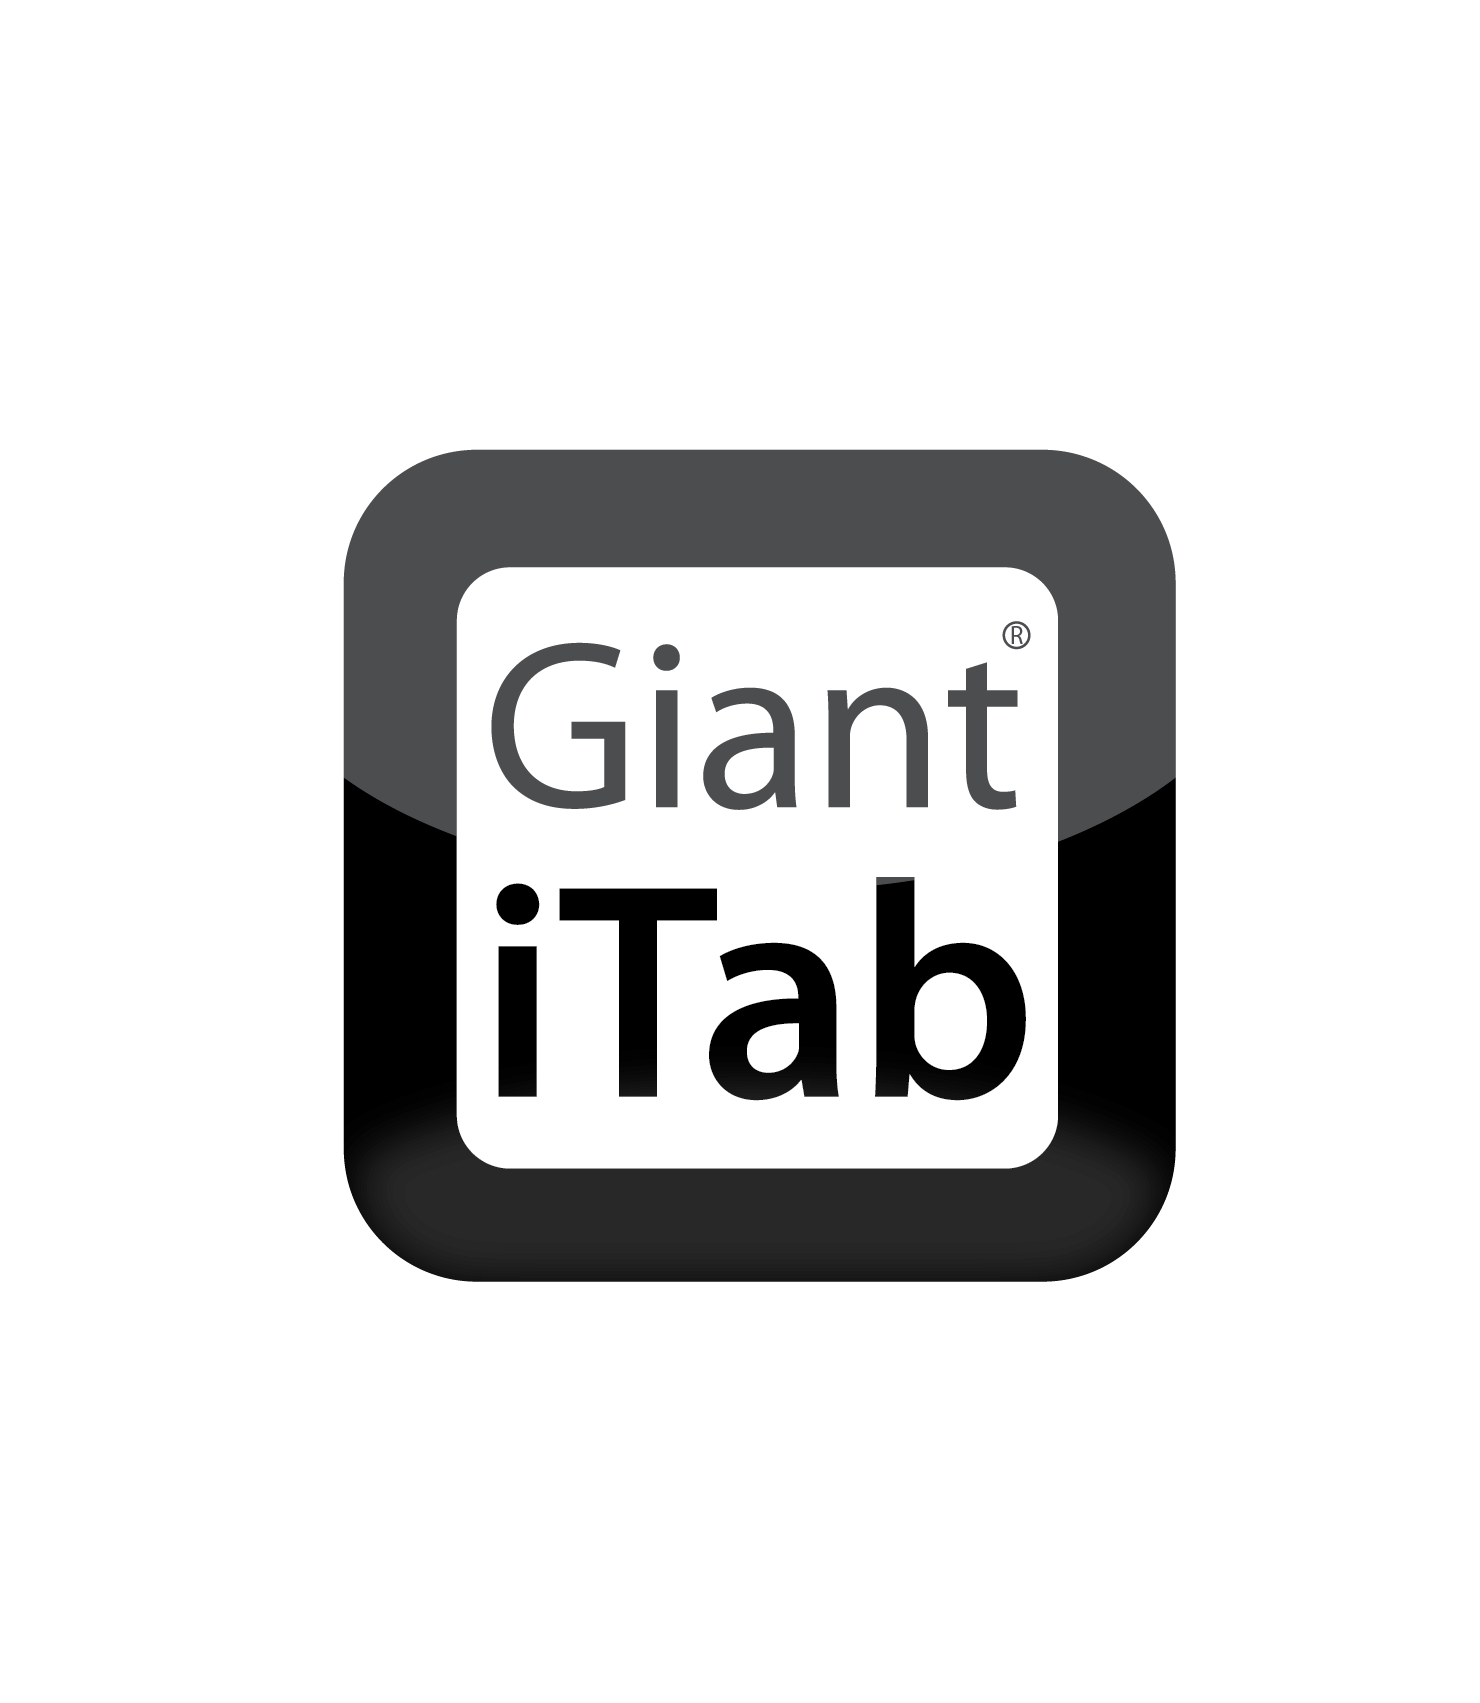 Giant iTab logo